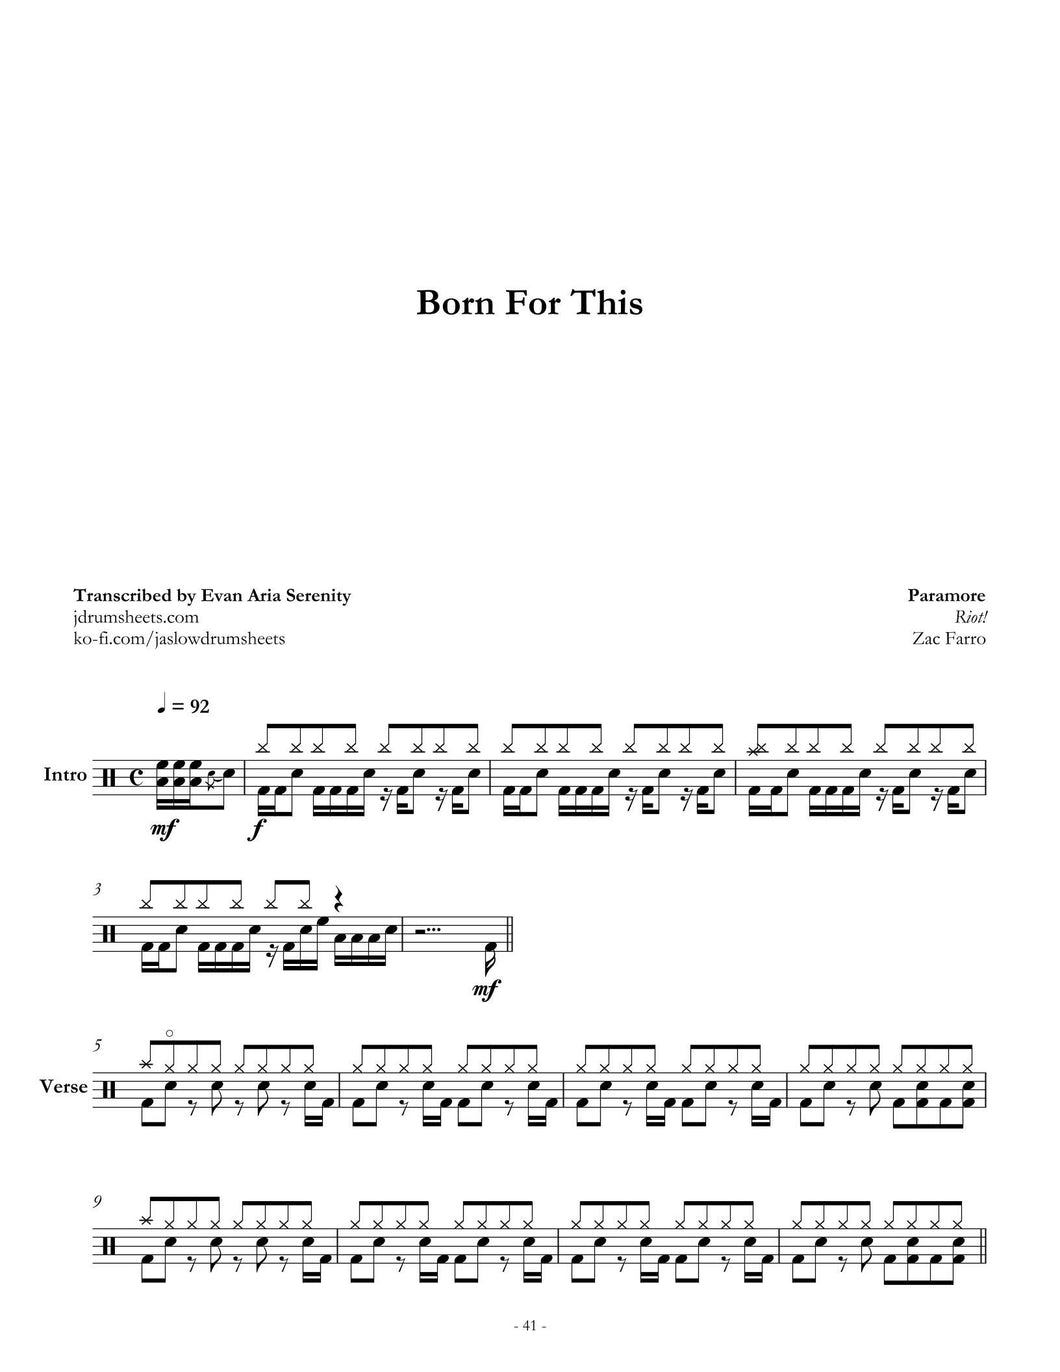 Born for This - Paramore - Full Drum Transcription / Drum Sheet Music - Jaslow Drum Sheets